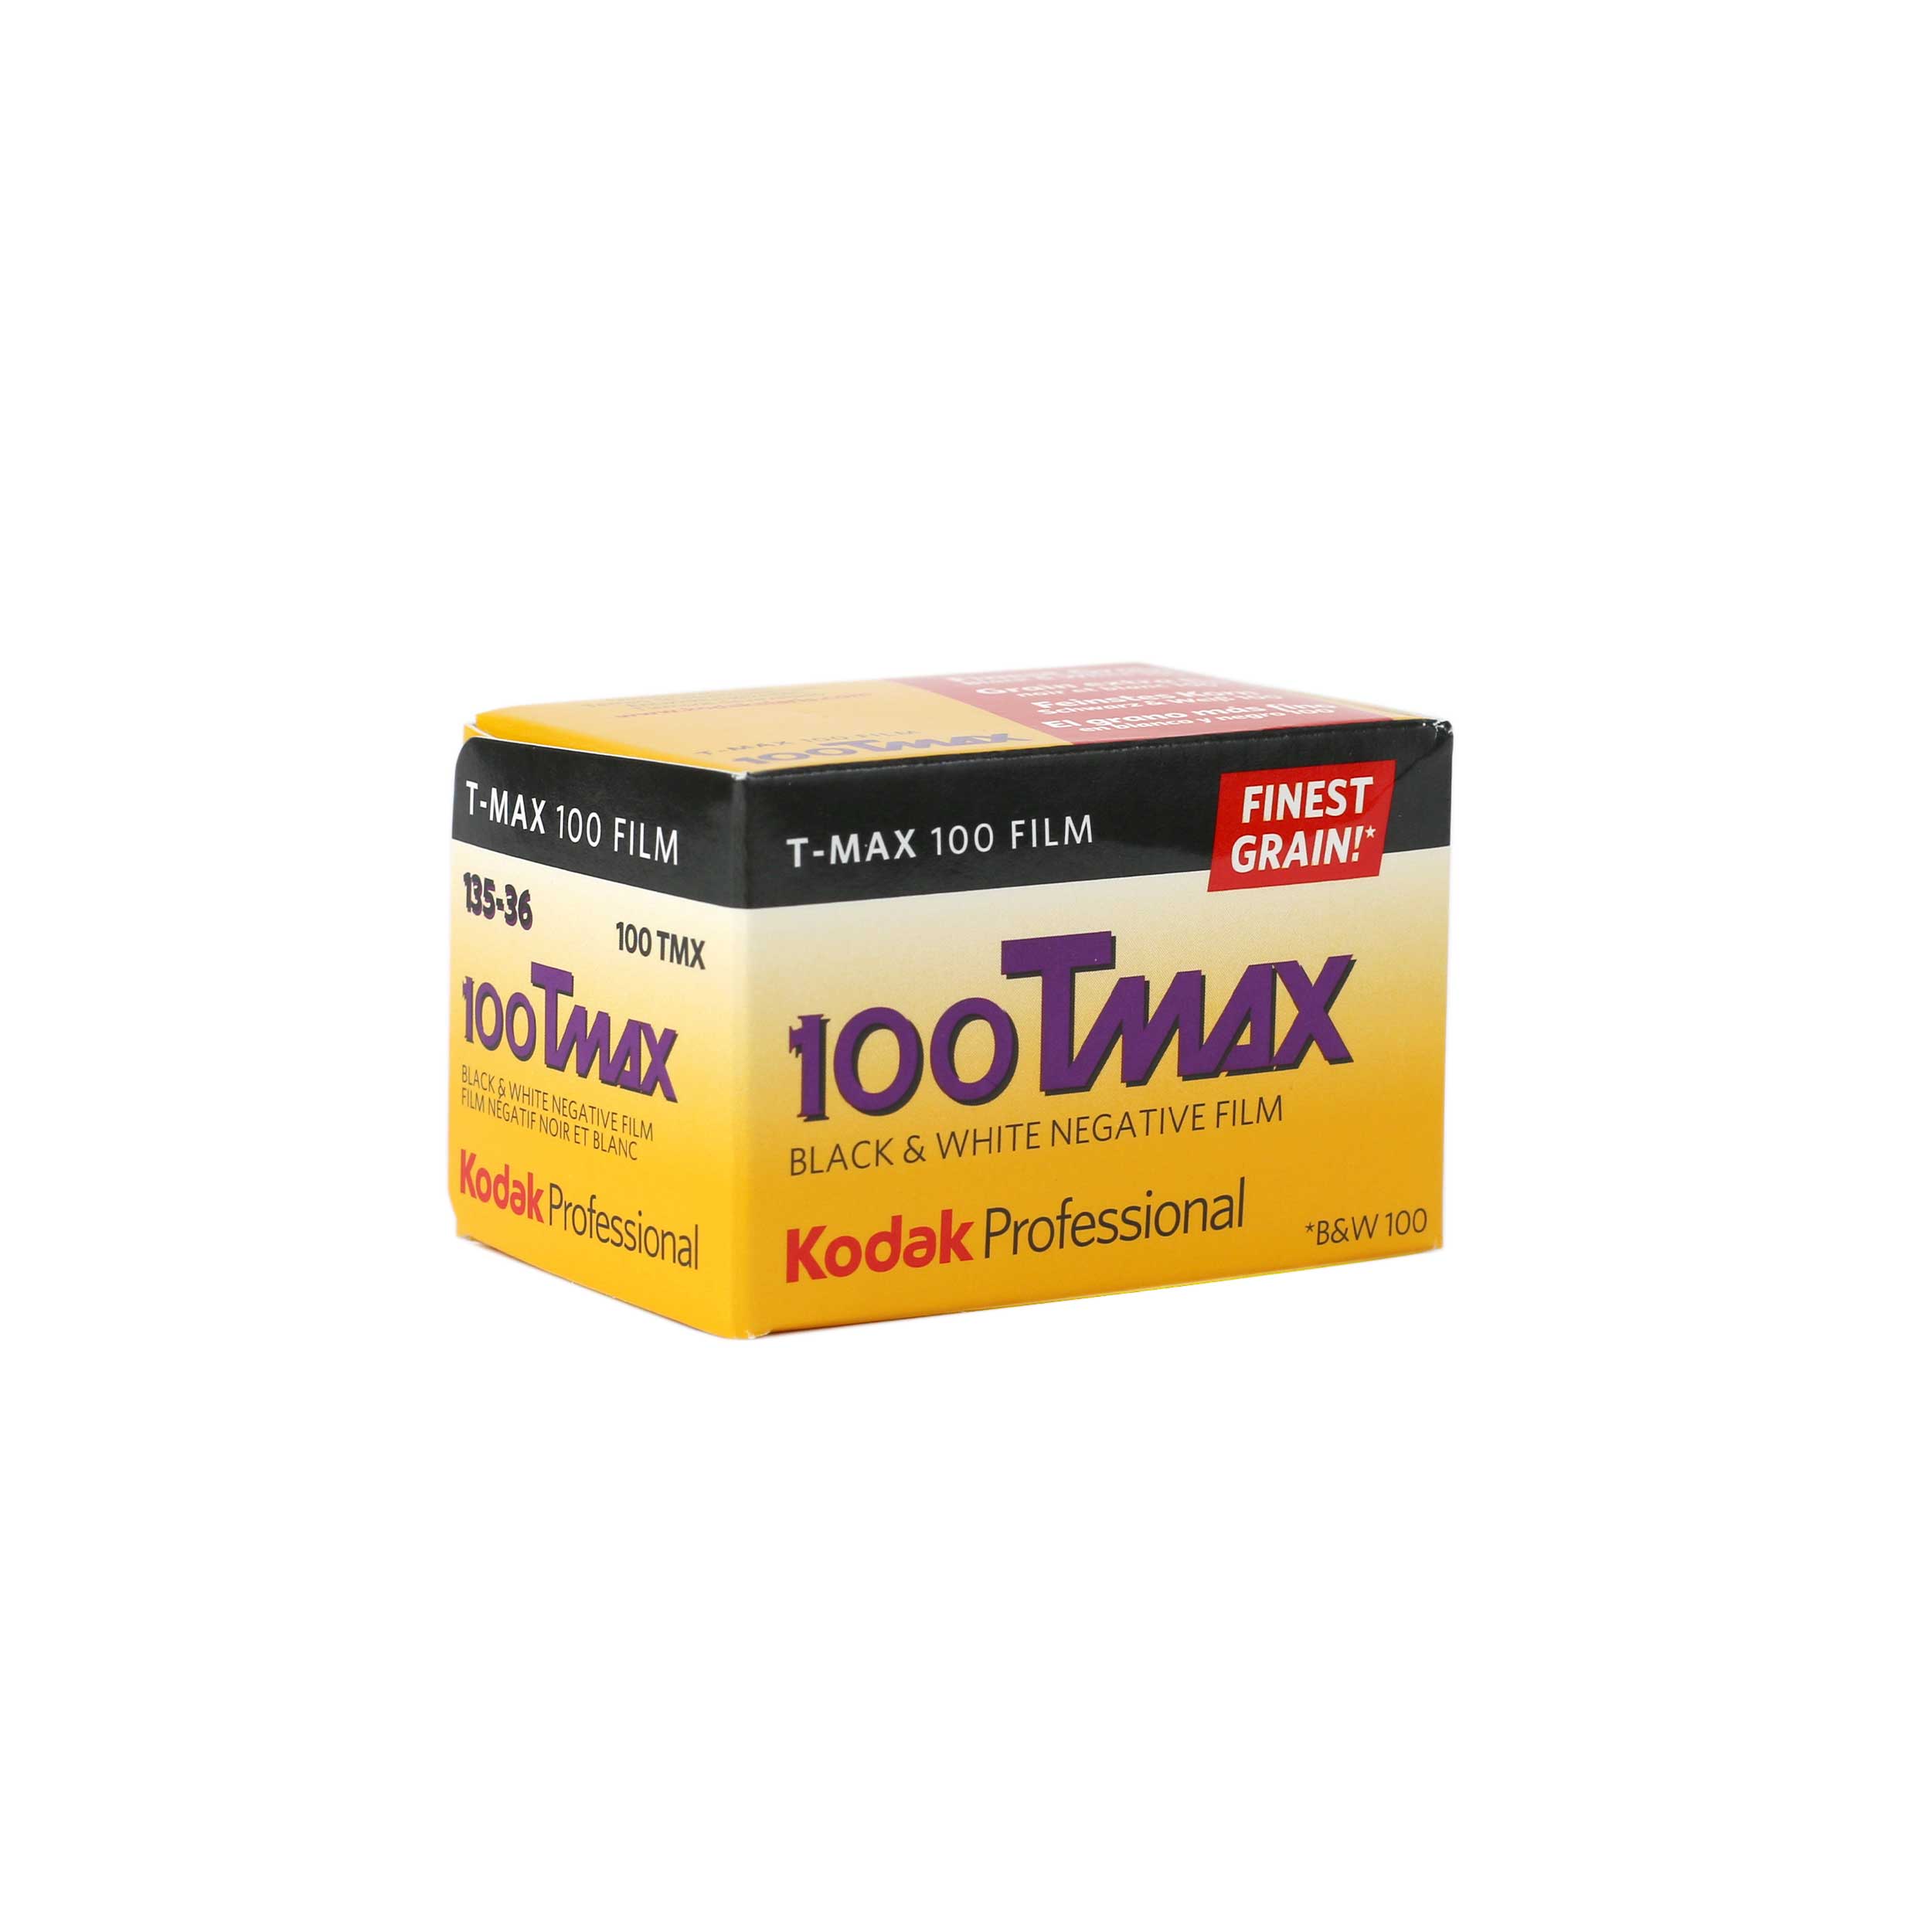 Kodak Professional TMAX 100, 35mm, 24 exp., Black and White Film